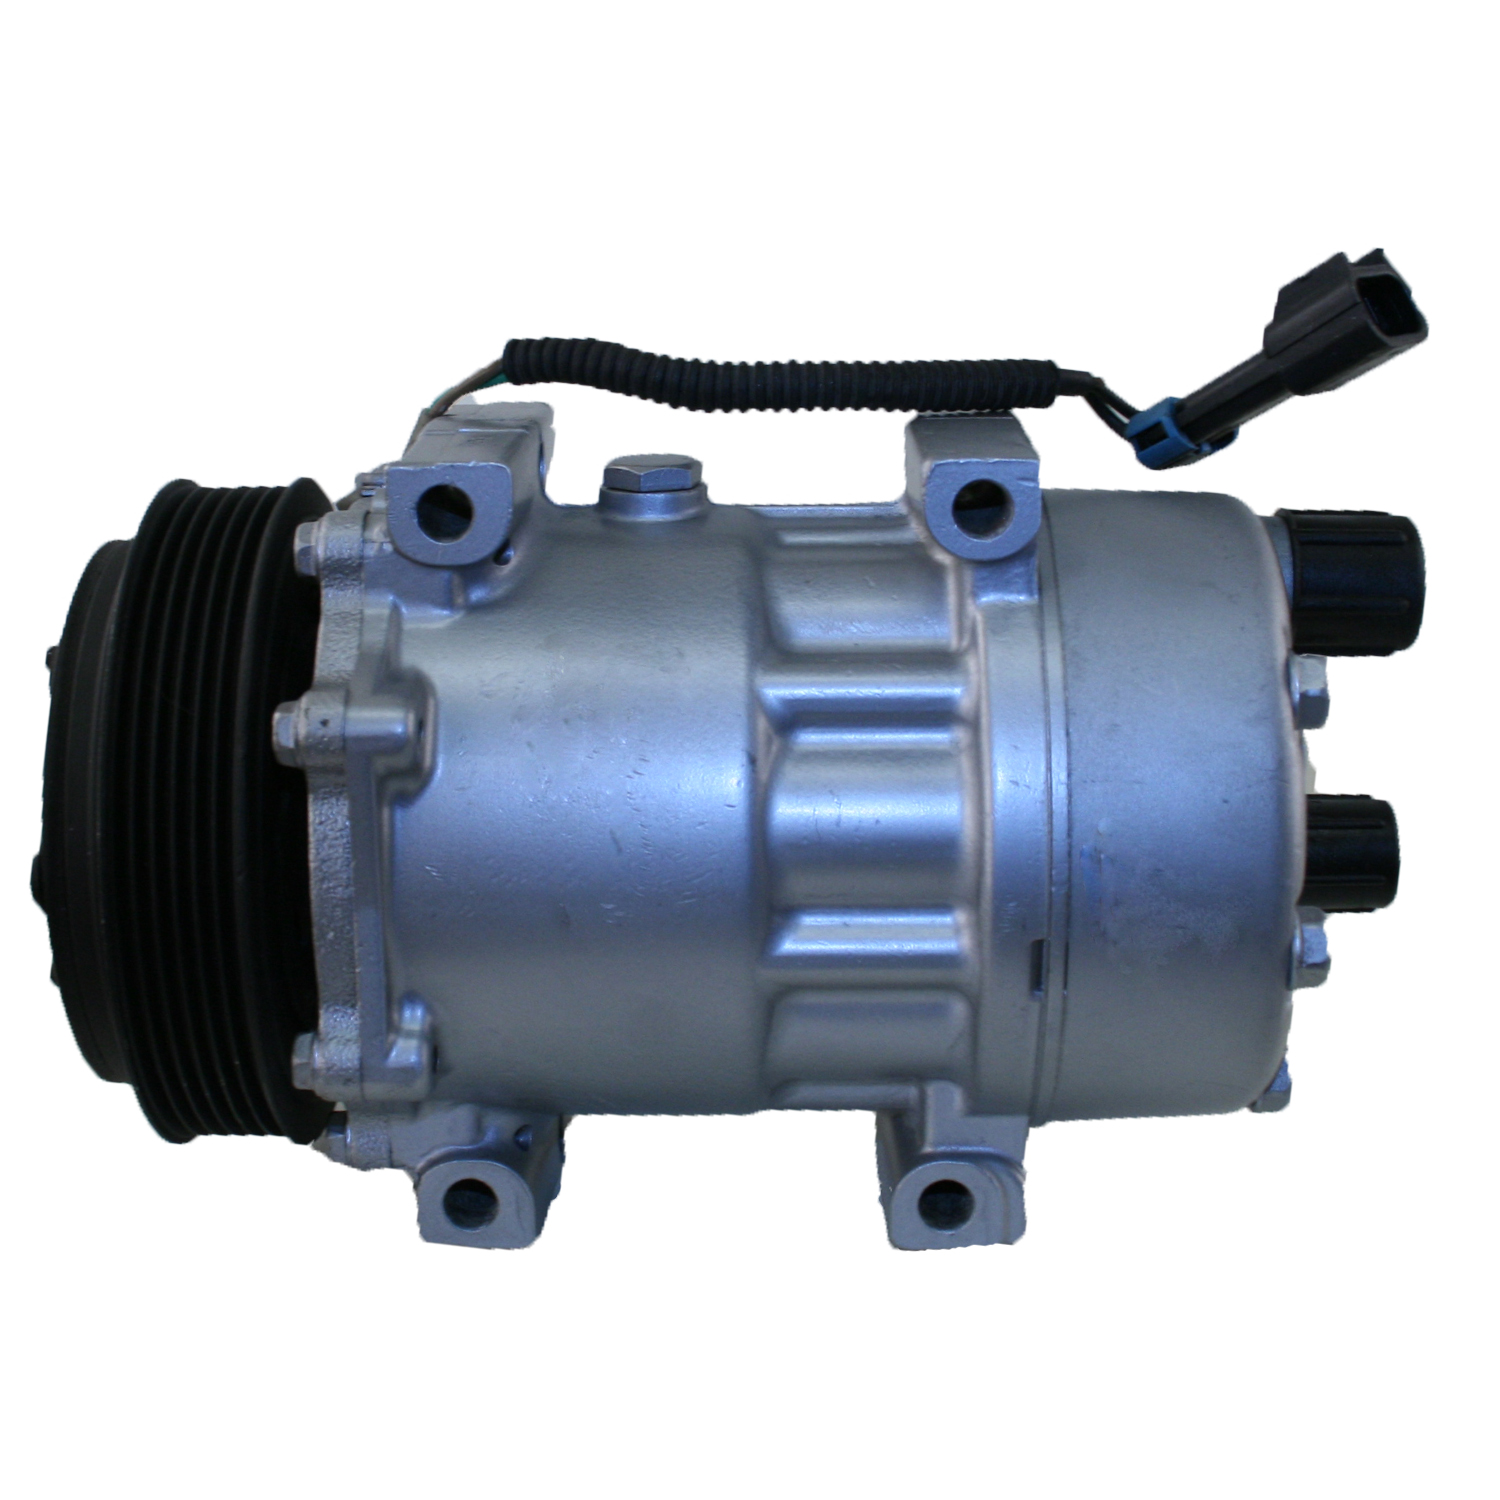 TCW Compressor 40567.6T2 Remanufactured